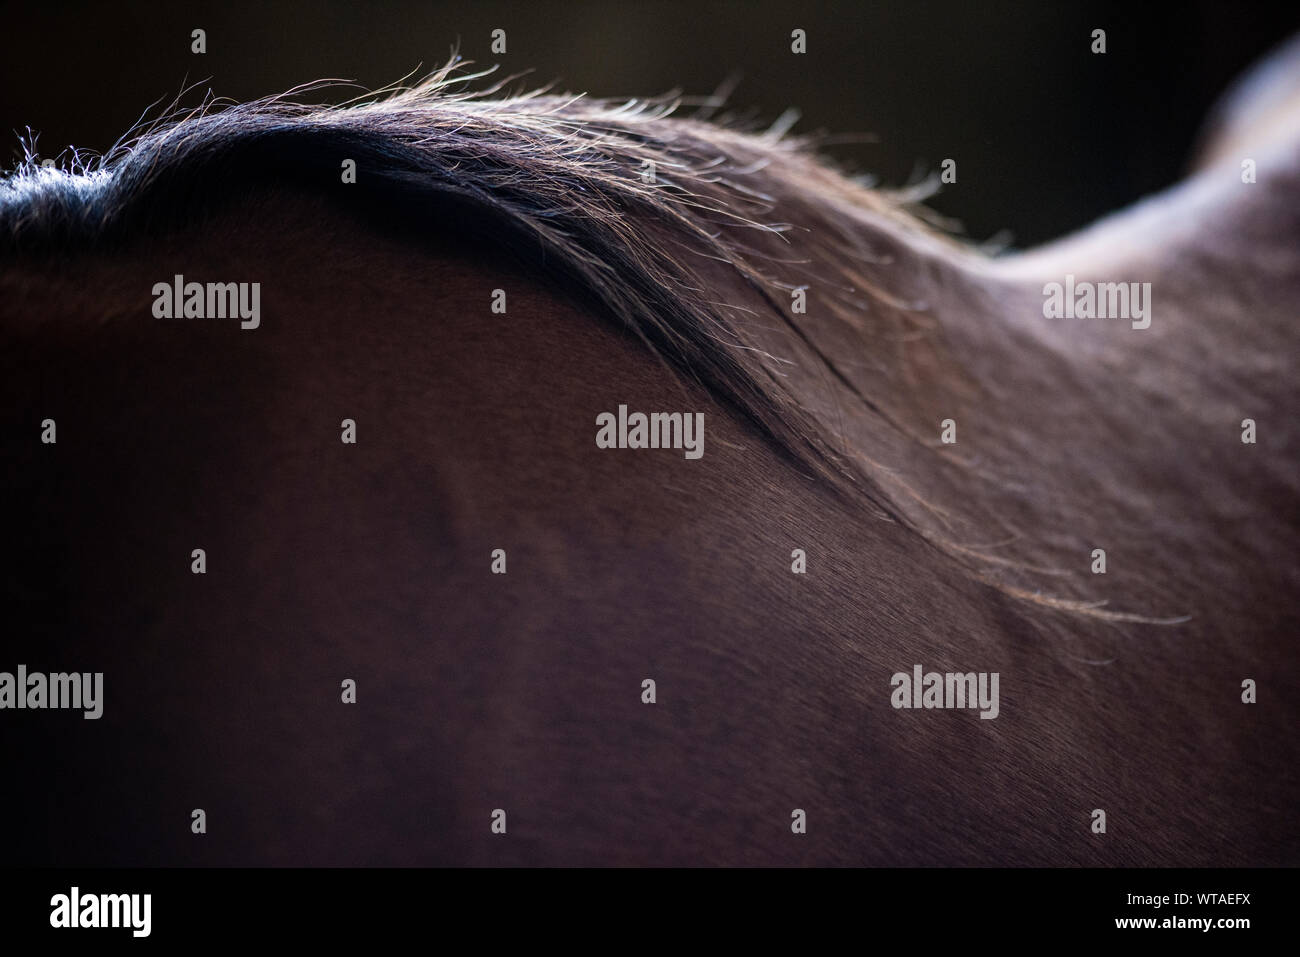 Horse main crest Stock Photo